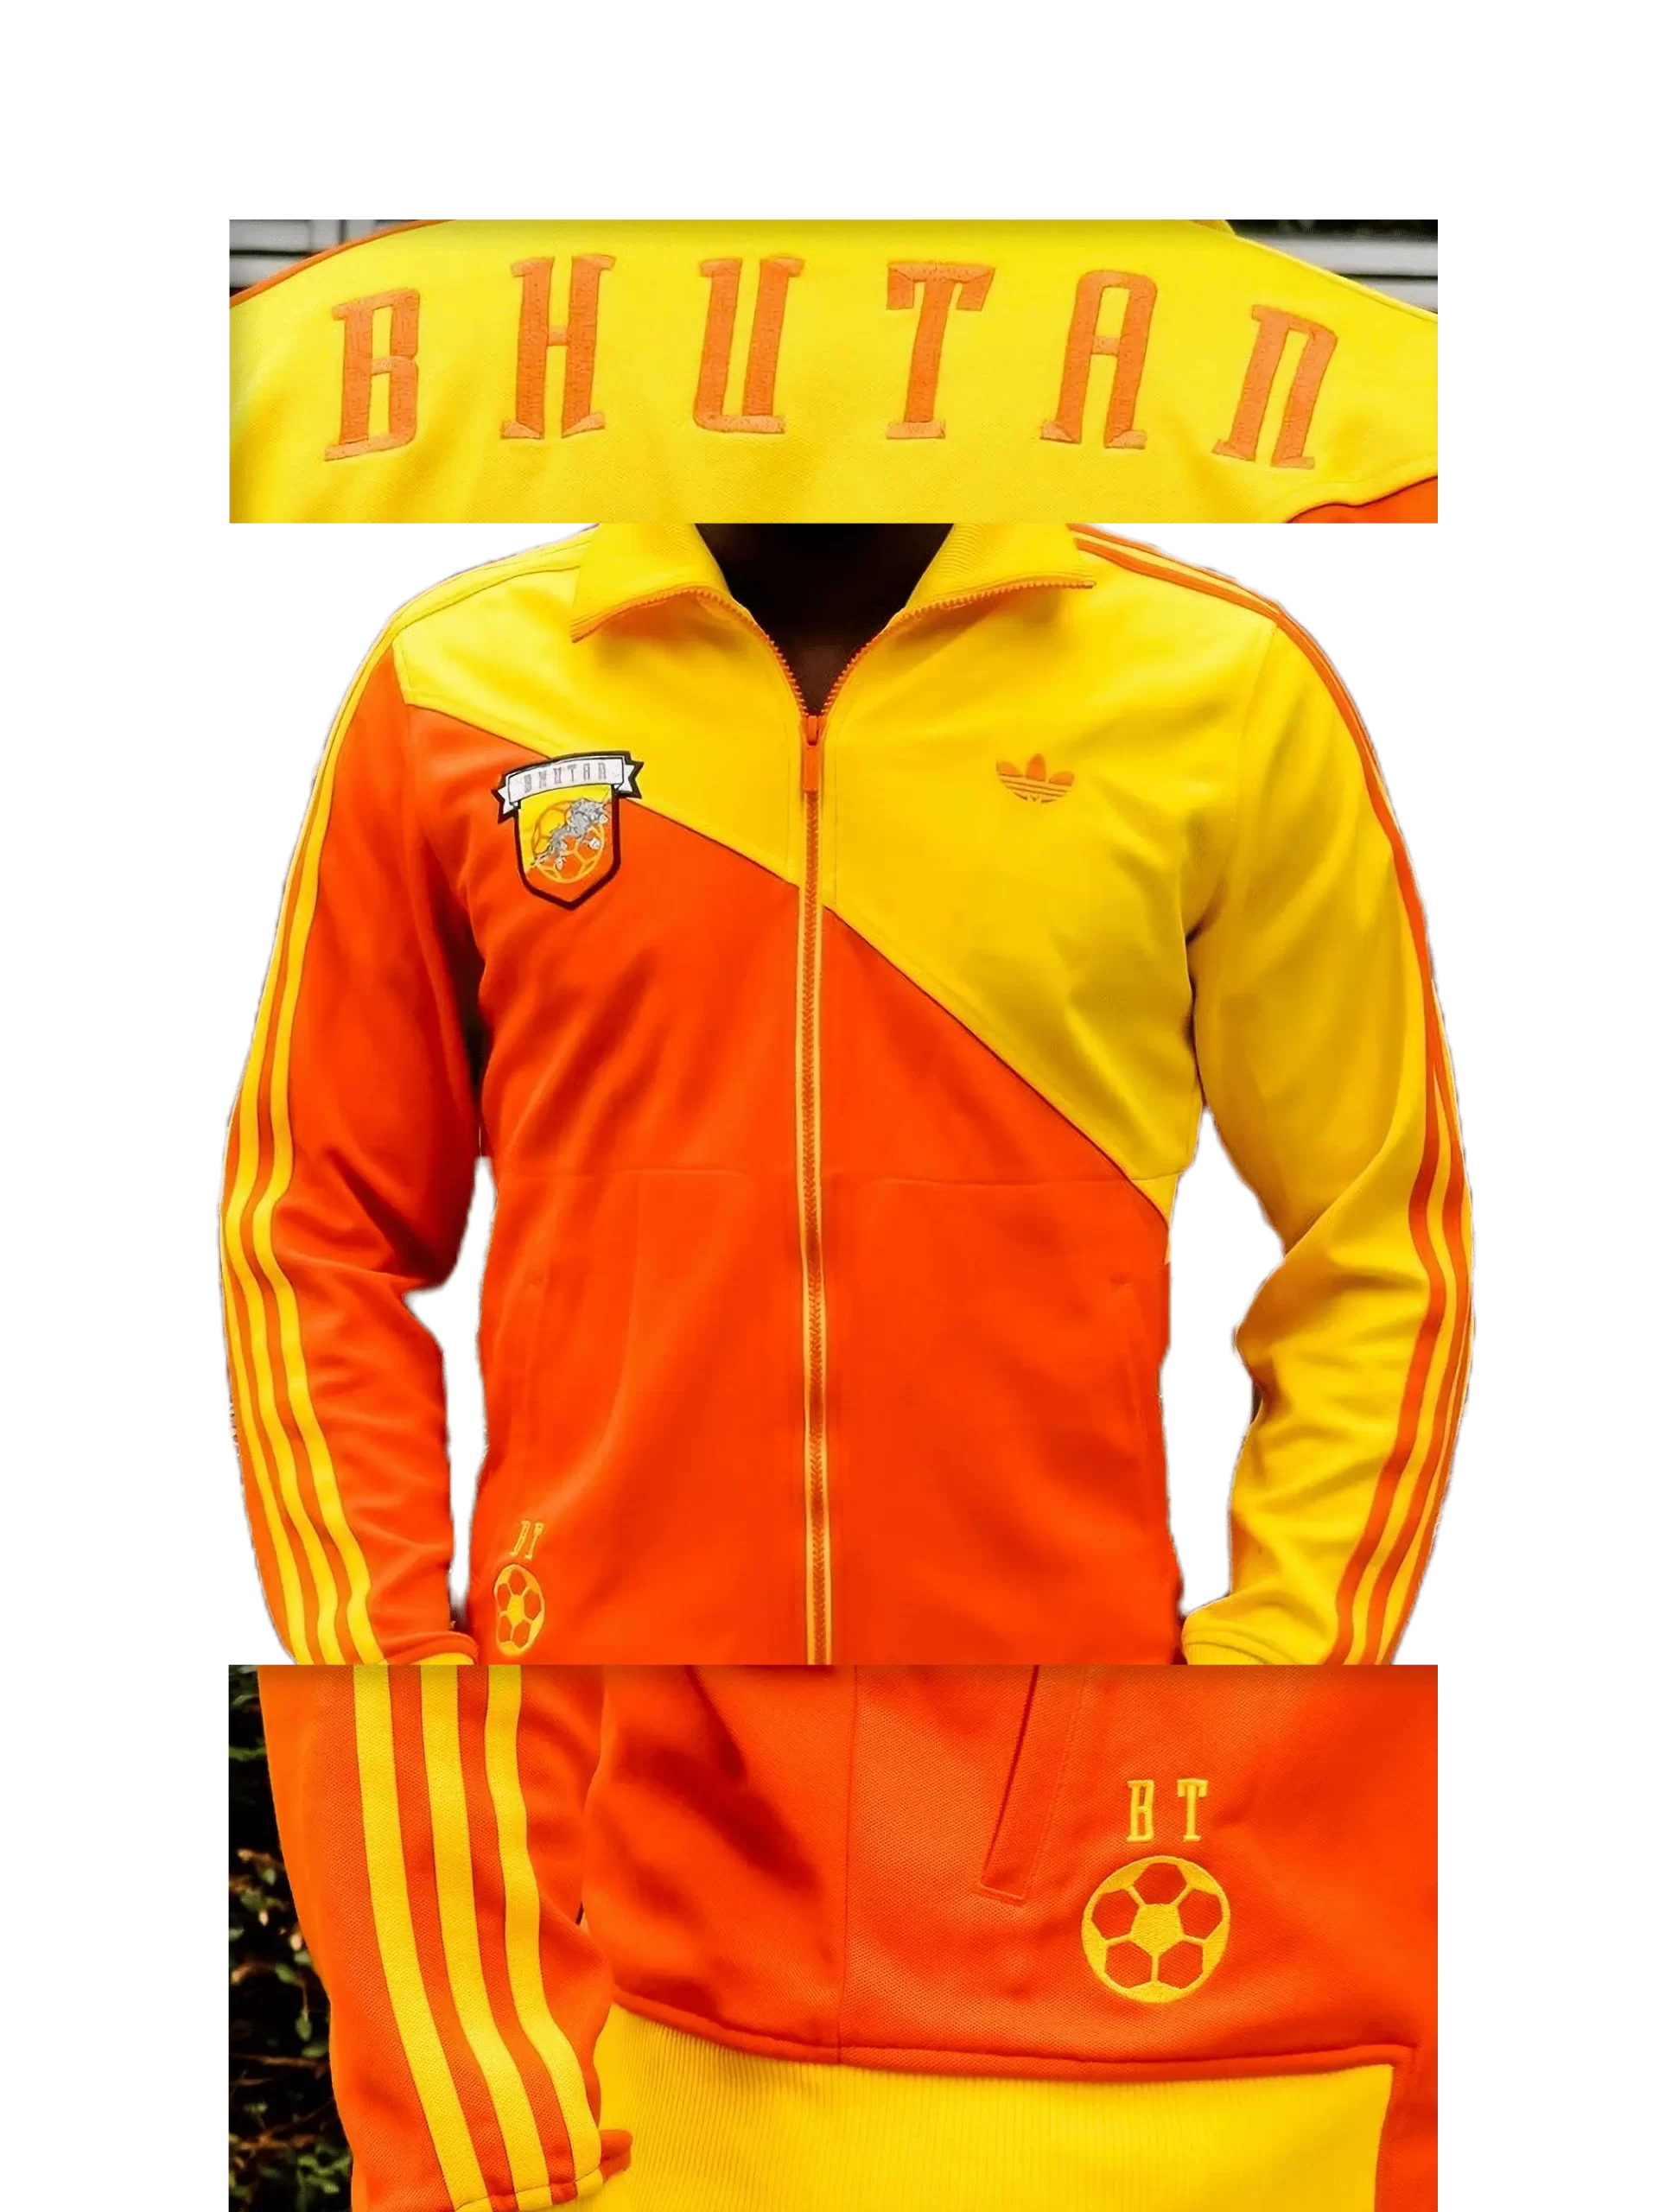 Men's 2007 Bhutan Track Top by Adidas Originals: Arrogant (EnLawded.com file #lmchk54131ip2y123310kg9st)